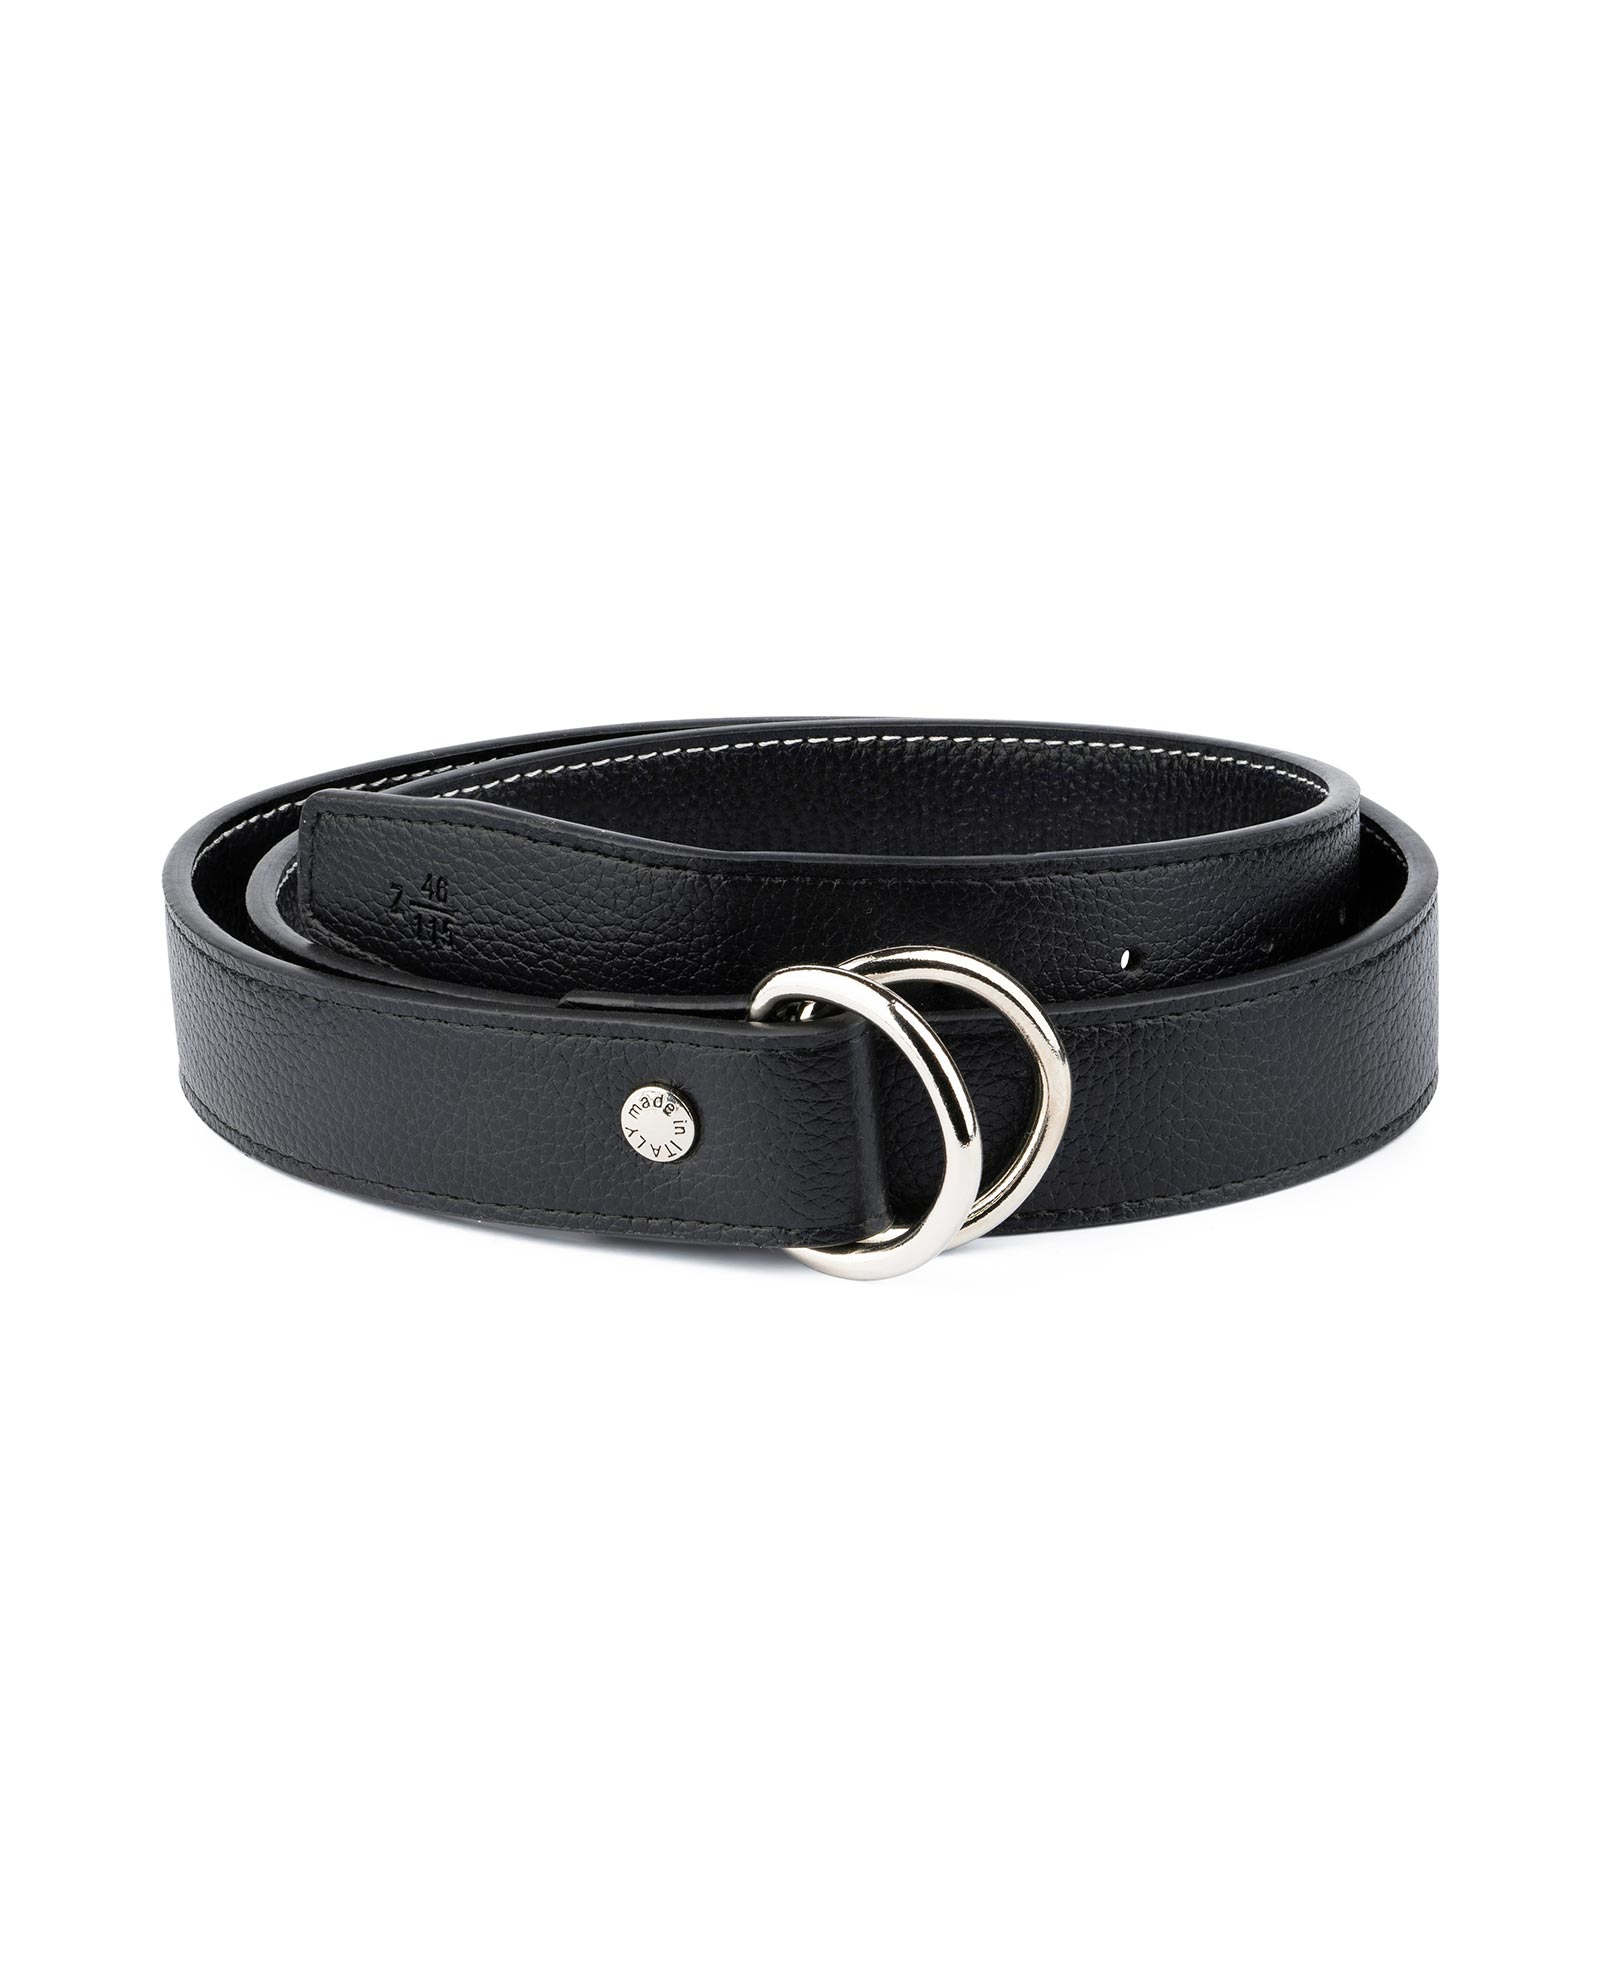 https://leatherbeltsonline.com/wp-content/uploads/2020/06/Mens-D-Ring-Belt-Black-Leather-1.jpg